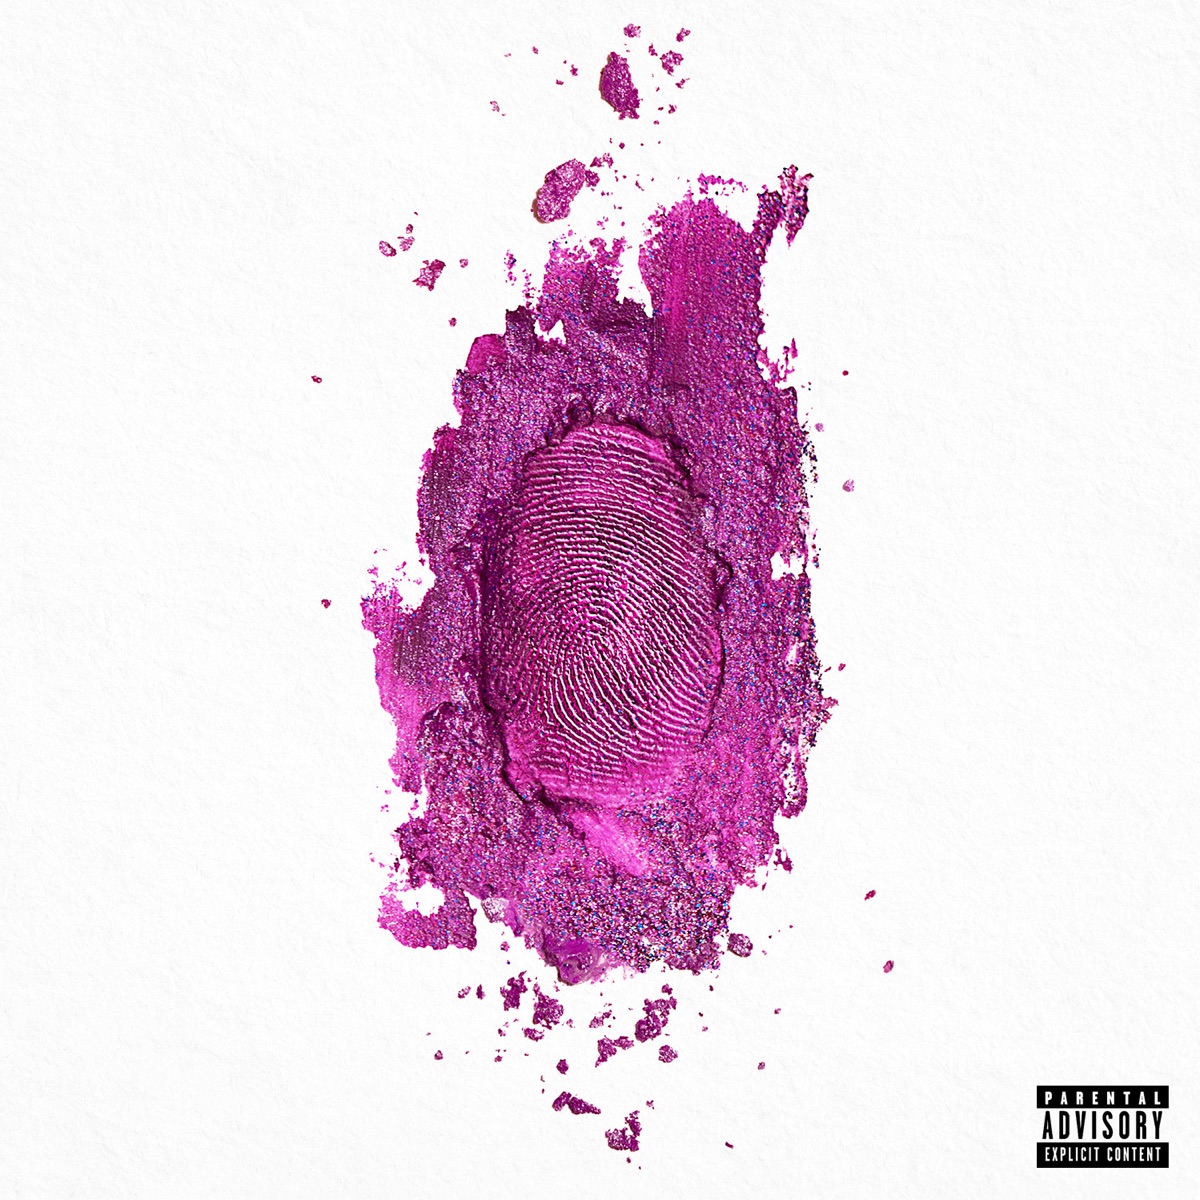 Nicki Minaj Charts on X: You can now pre-save @NICKIMINAJ's upcoming album  “Pink Friday 2” on Apple Music and Spotify. — Pre-Save it NOW:    / X